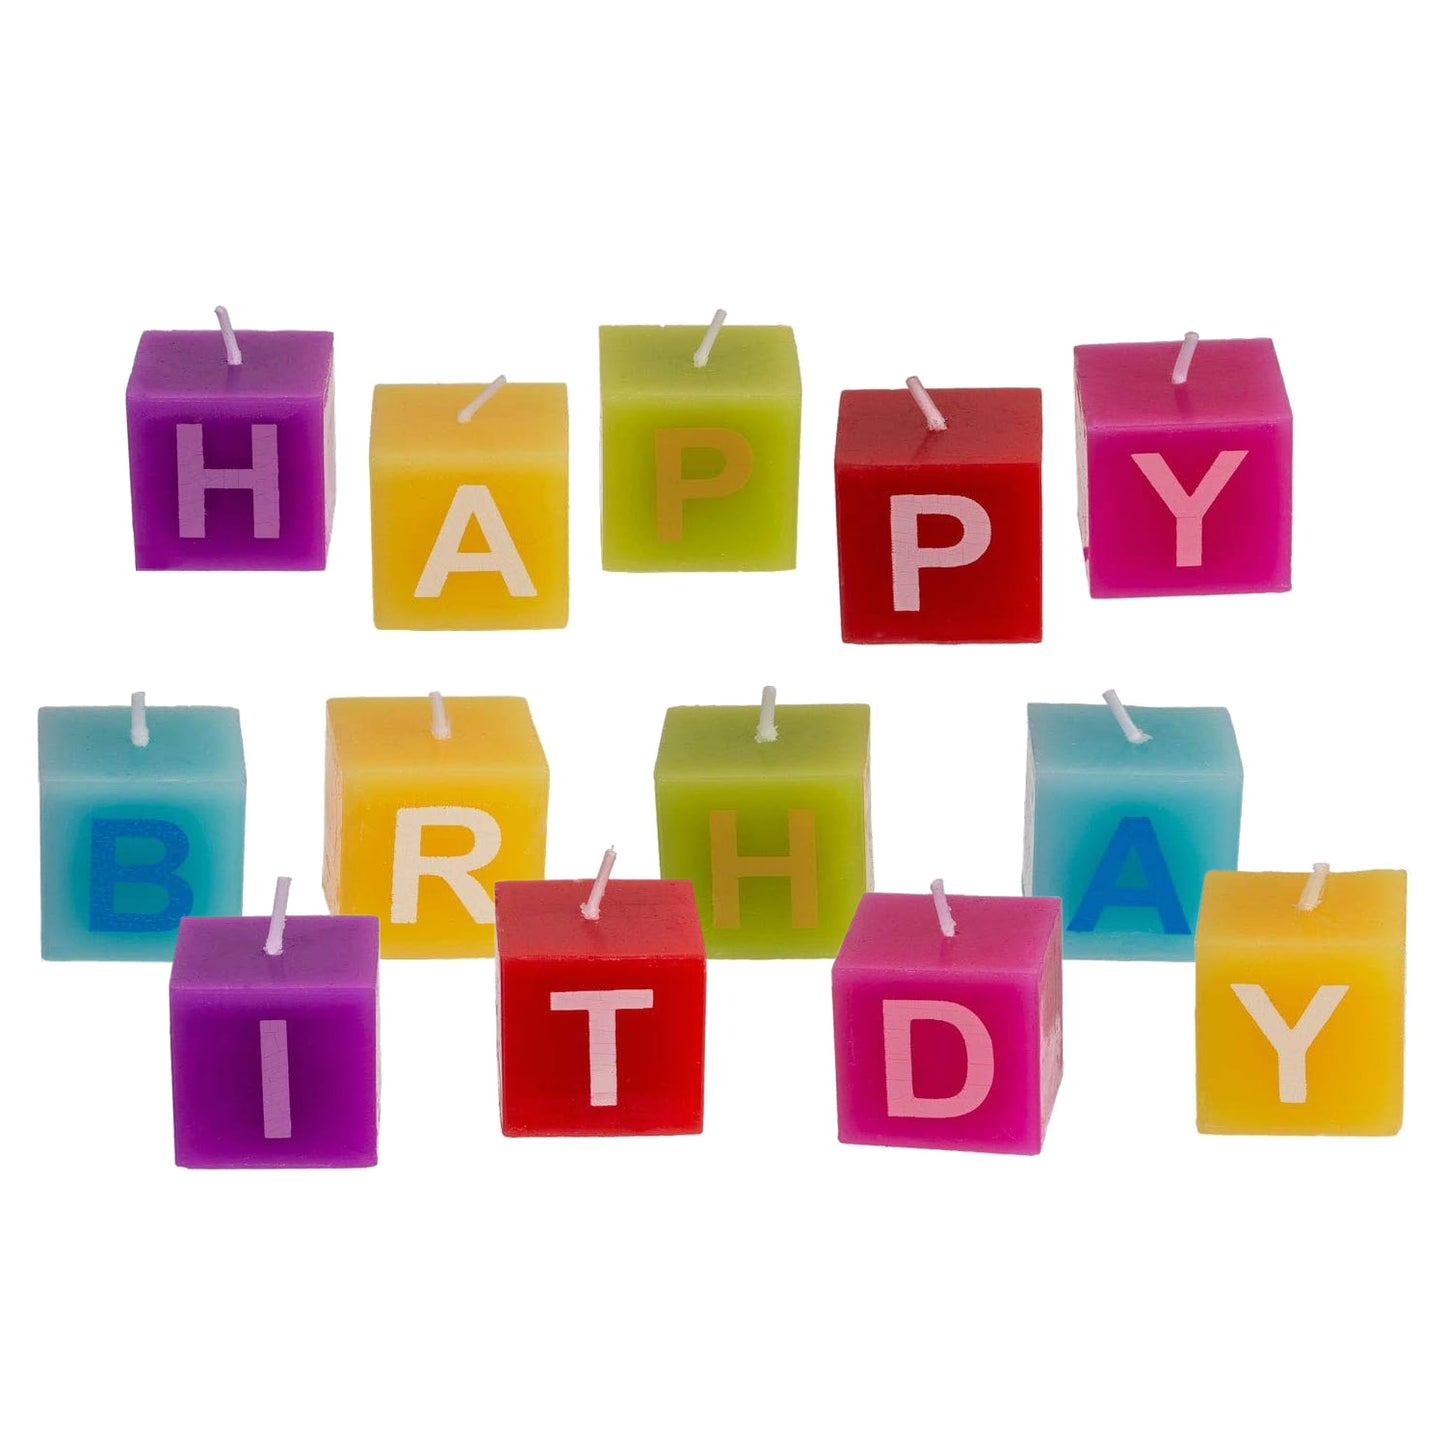 Happy Birthday Candle Blocks